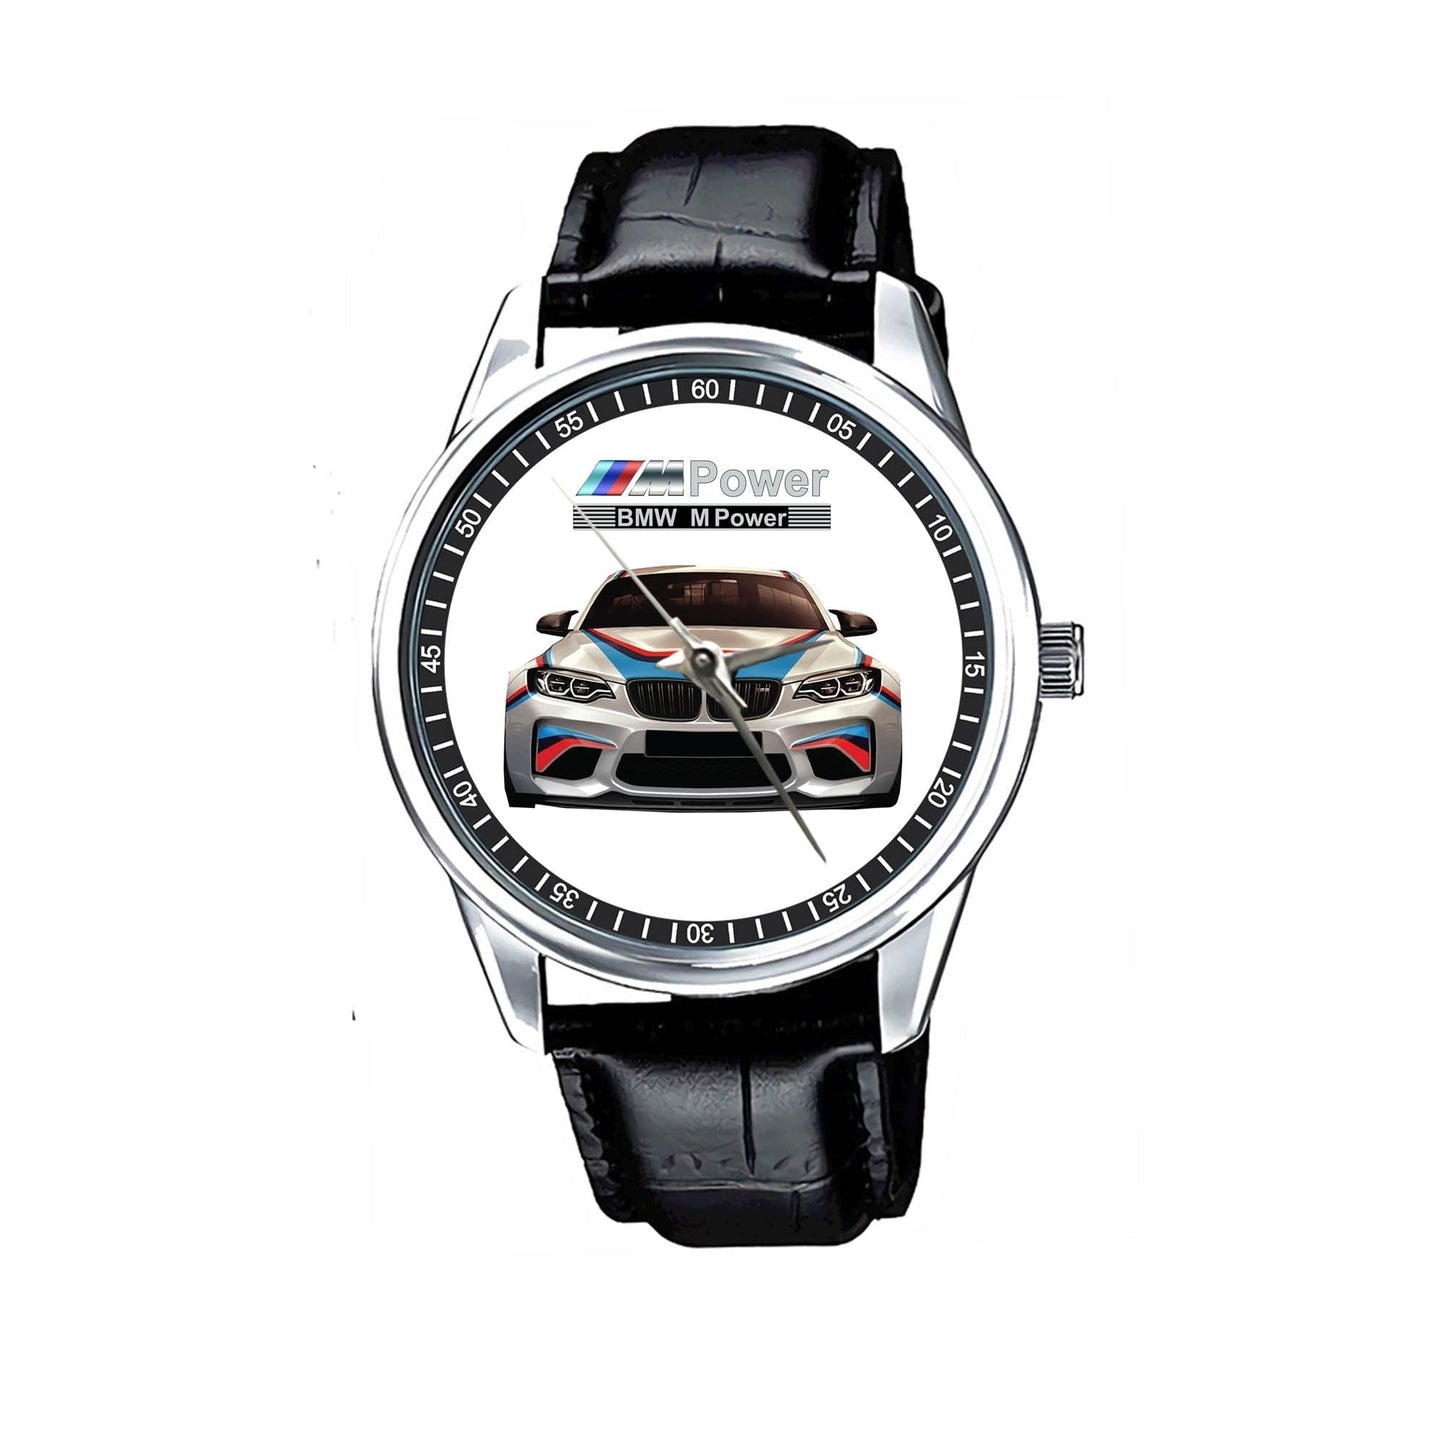 BMW M Power Watches KP347